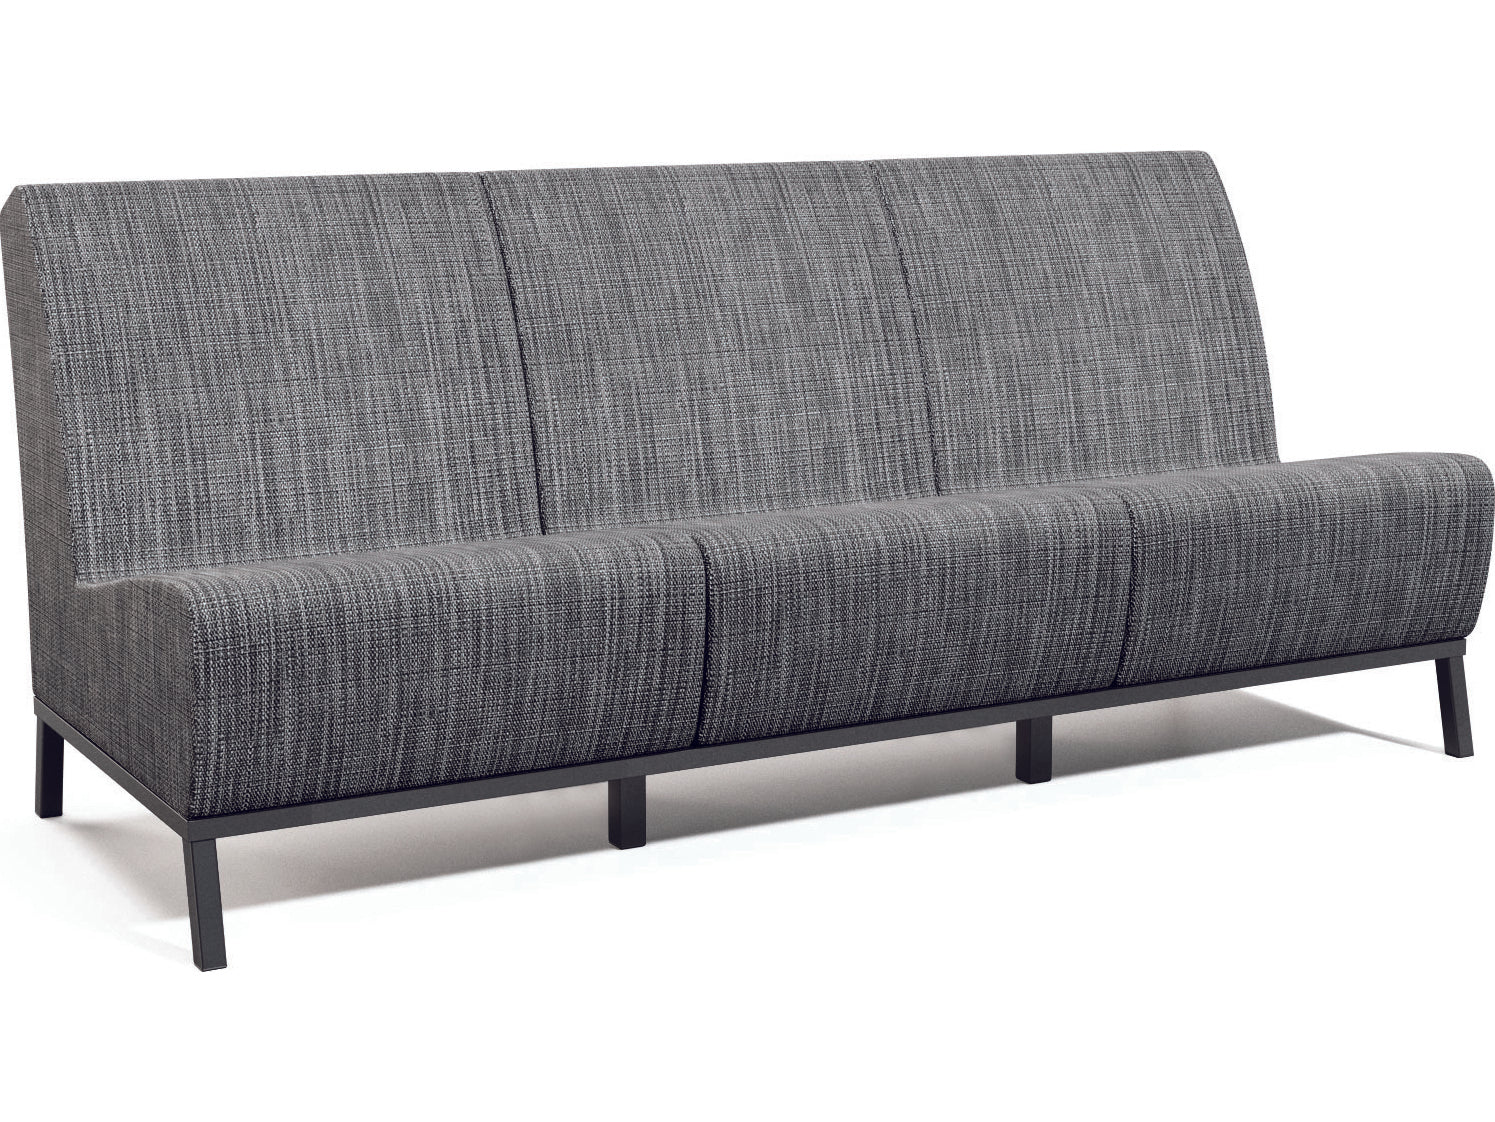 Homecrest Revive Air Sensation Sling Aluminum Modular Sofa